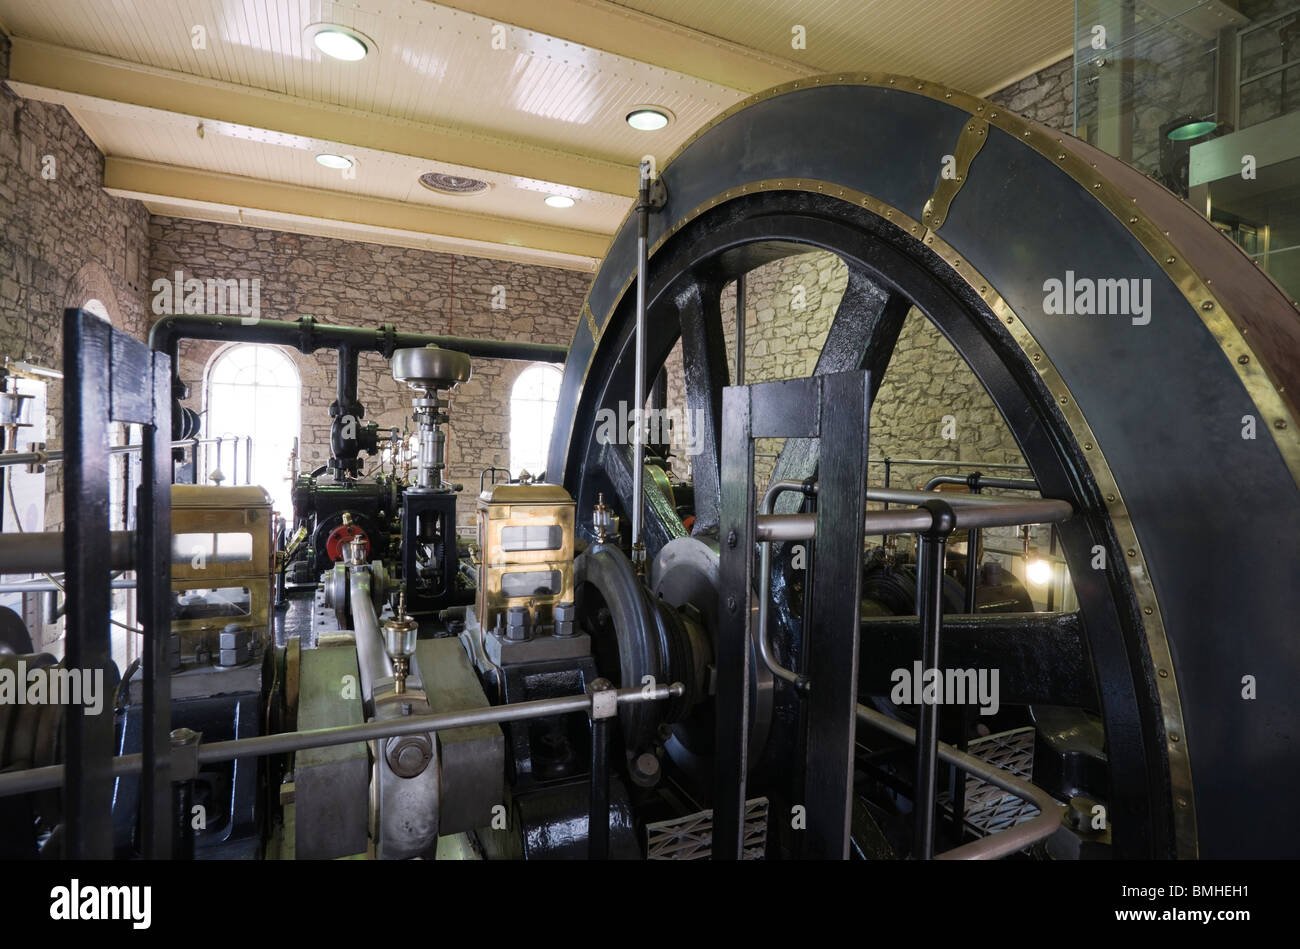 New Lanark - Robert Owen's utopian industrial village in Scotland. 1911 Petrie horizontal twin-tandem steam engine Stock Photo